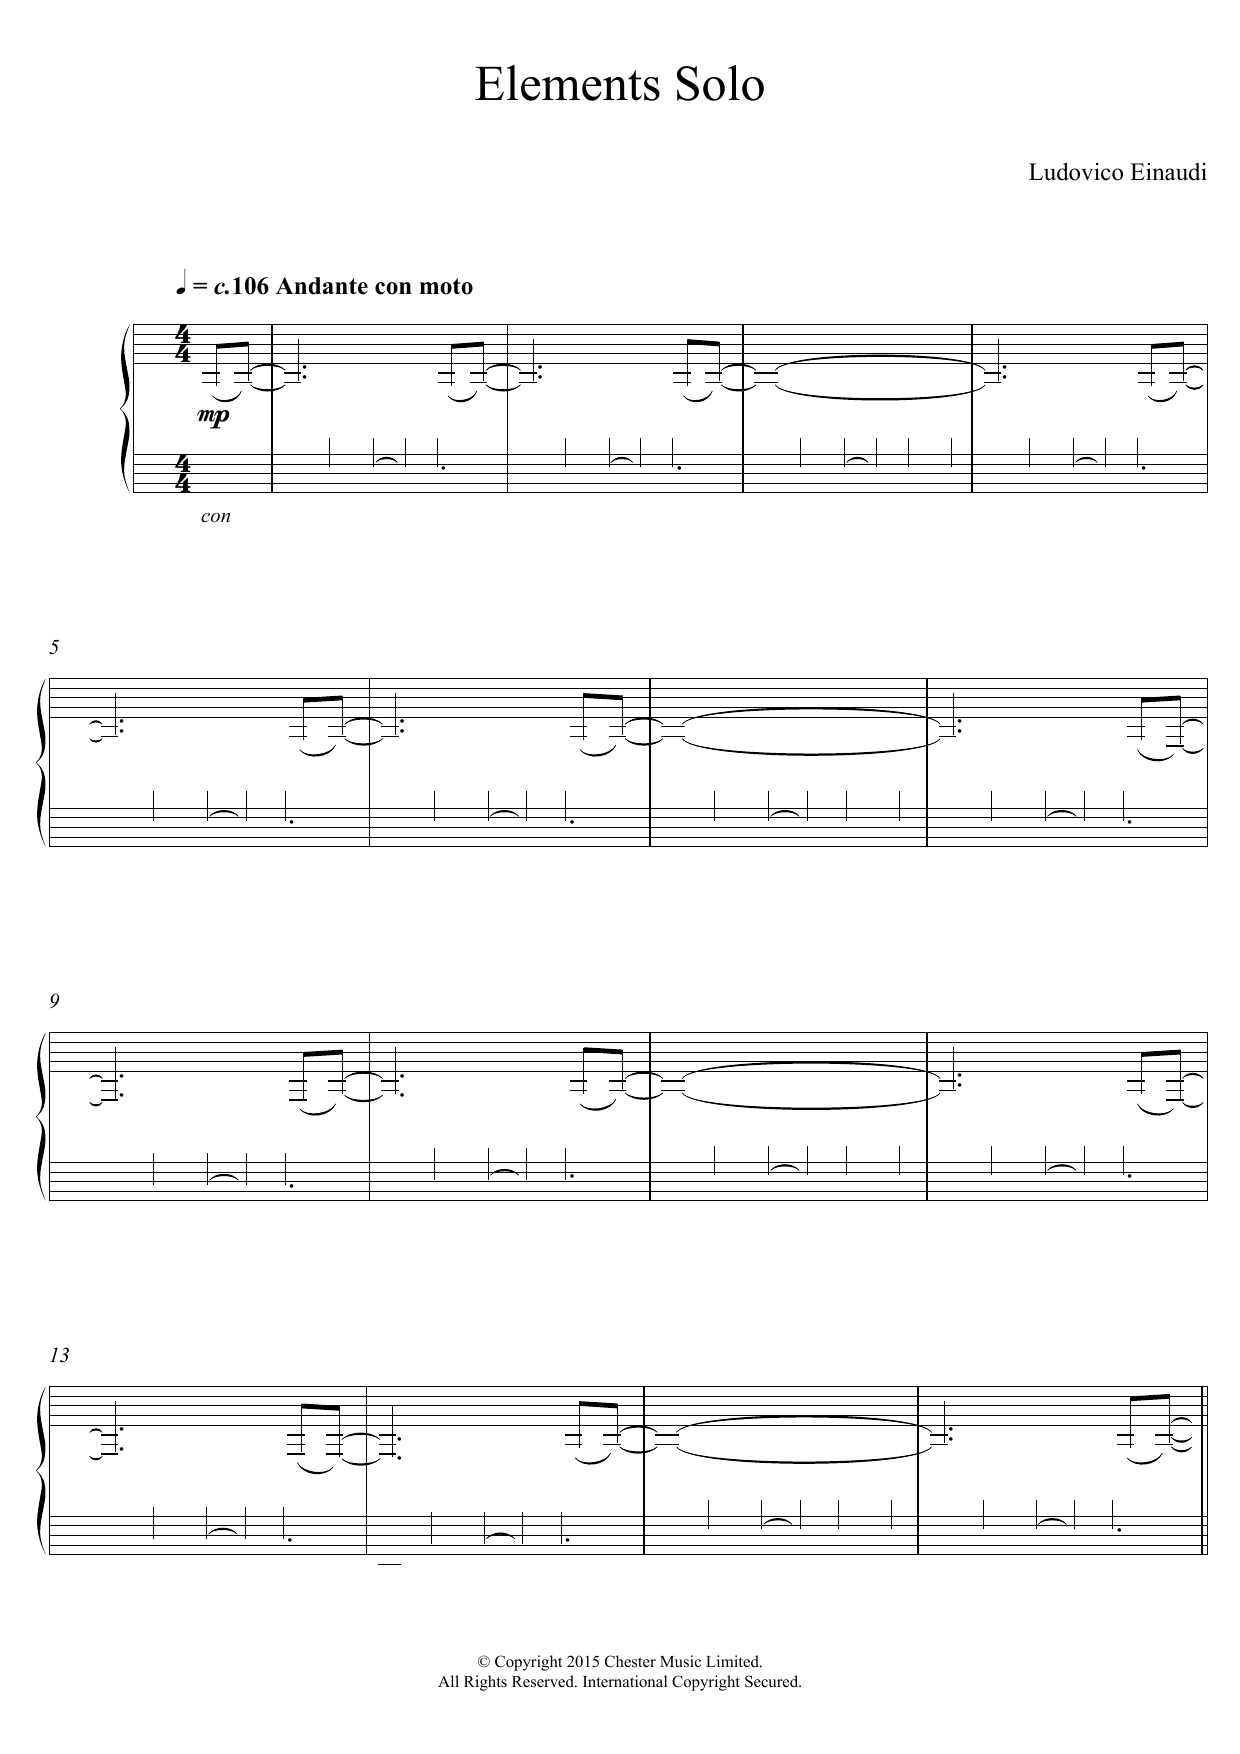 Download Ludovico Einaudi Elements Solo Sheet Music